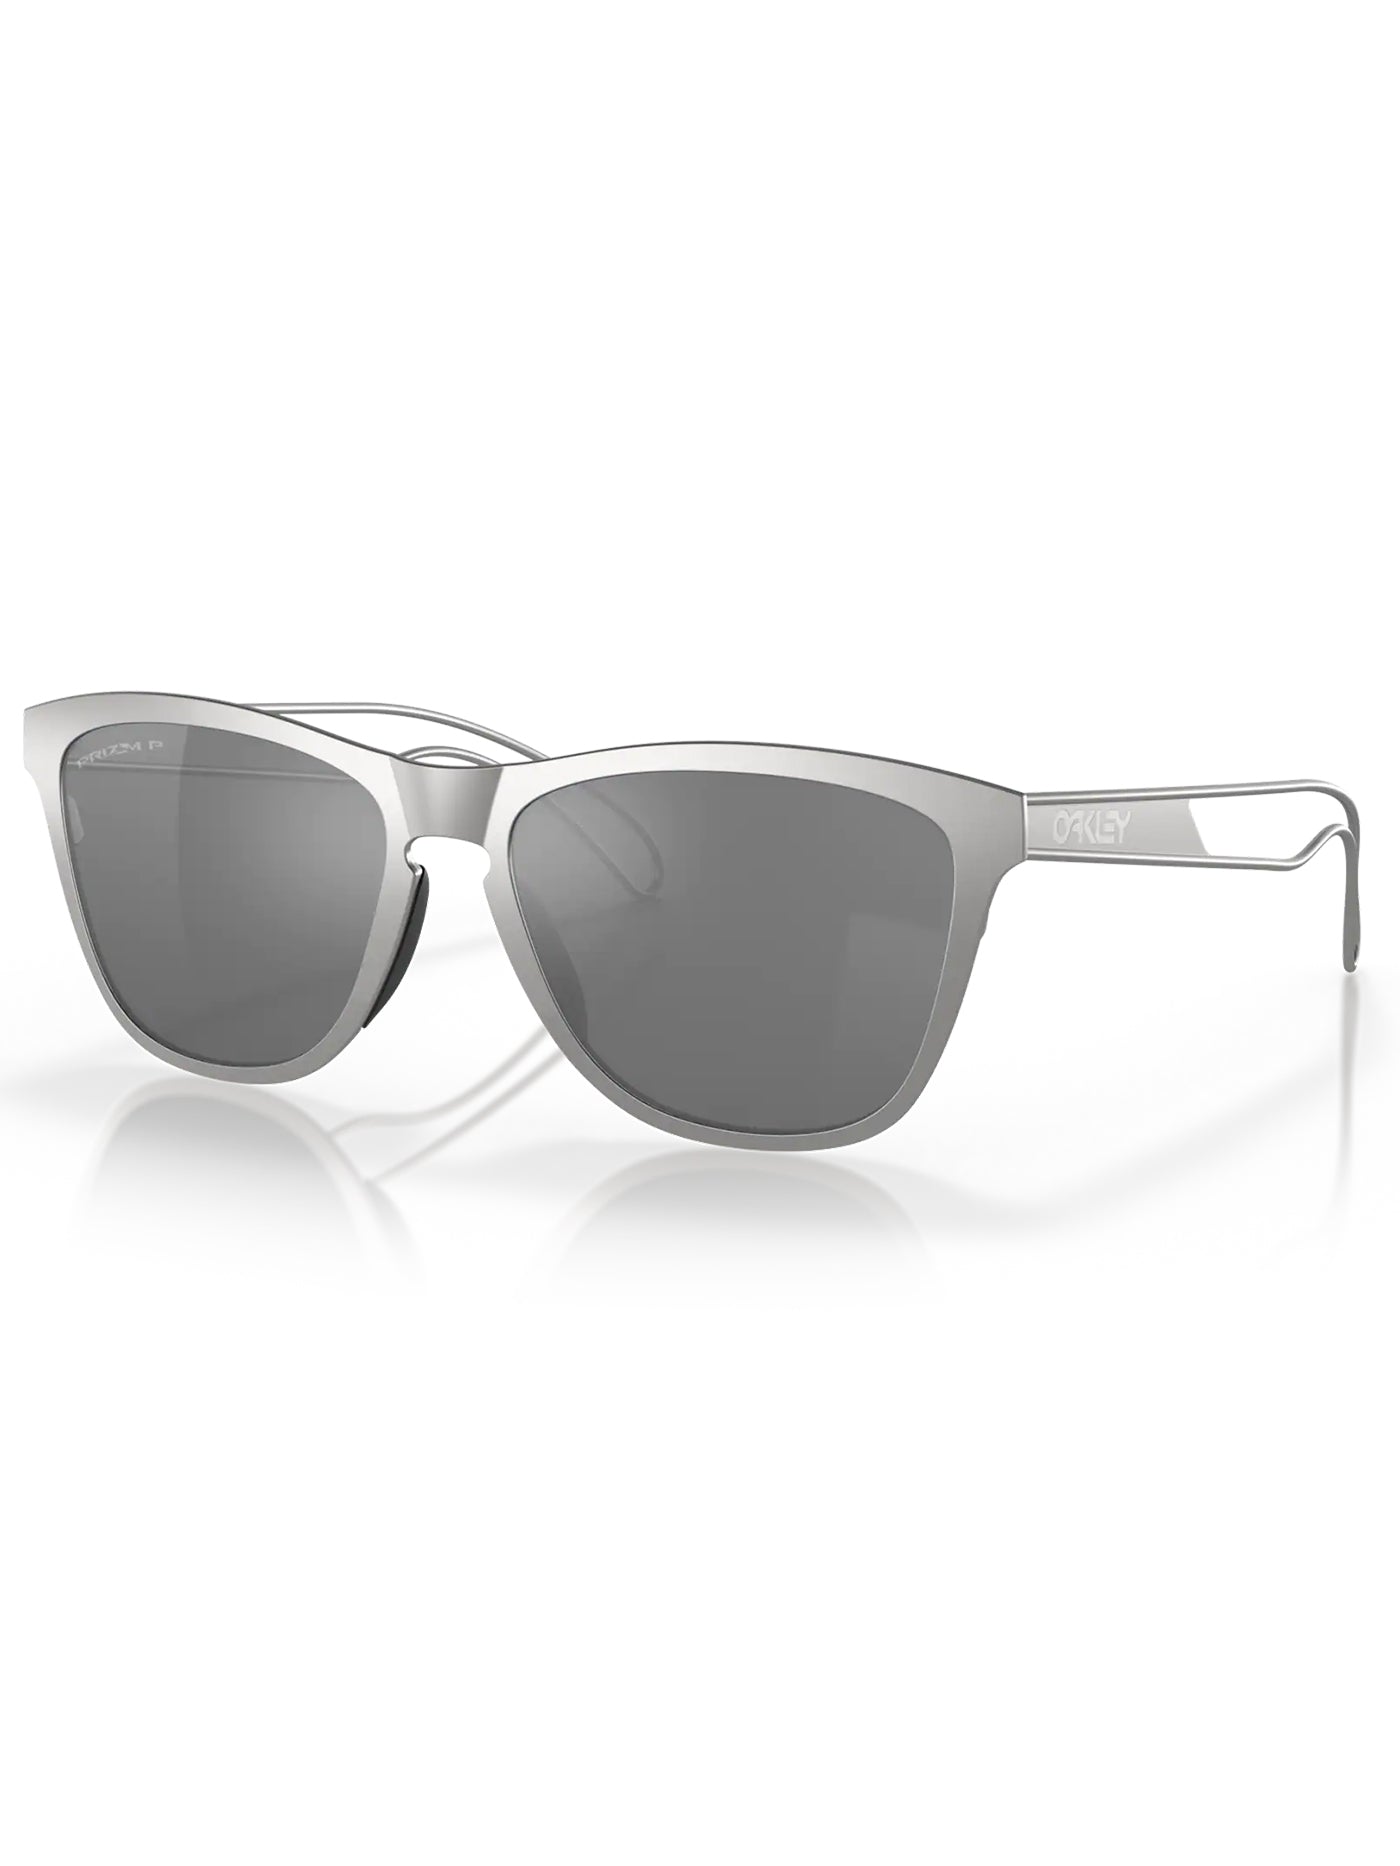 Oakley Frogskins Raw Polarized Sunglasses